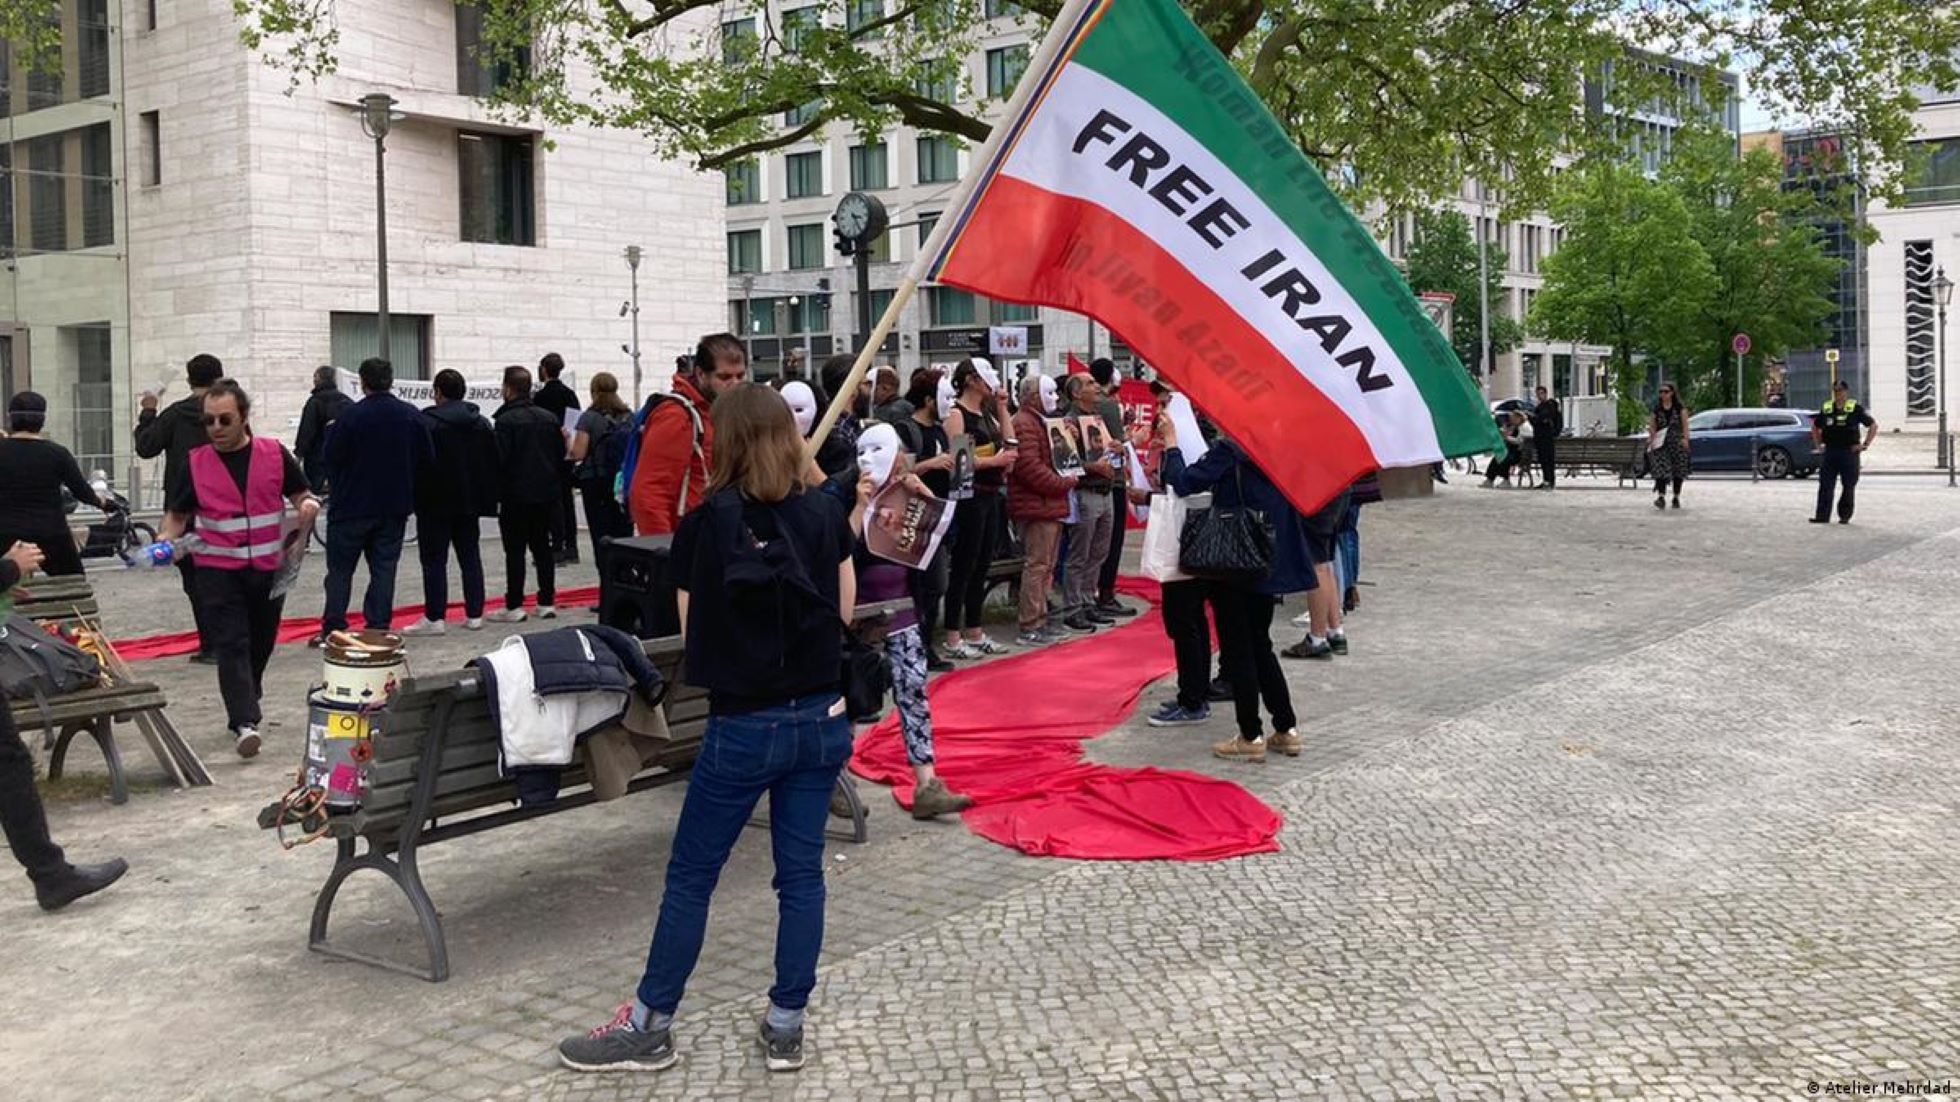 Iran Summoned Swiss Ambassador Over “Fake” Flag Photo